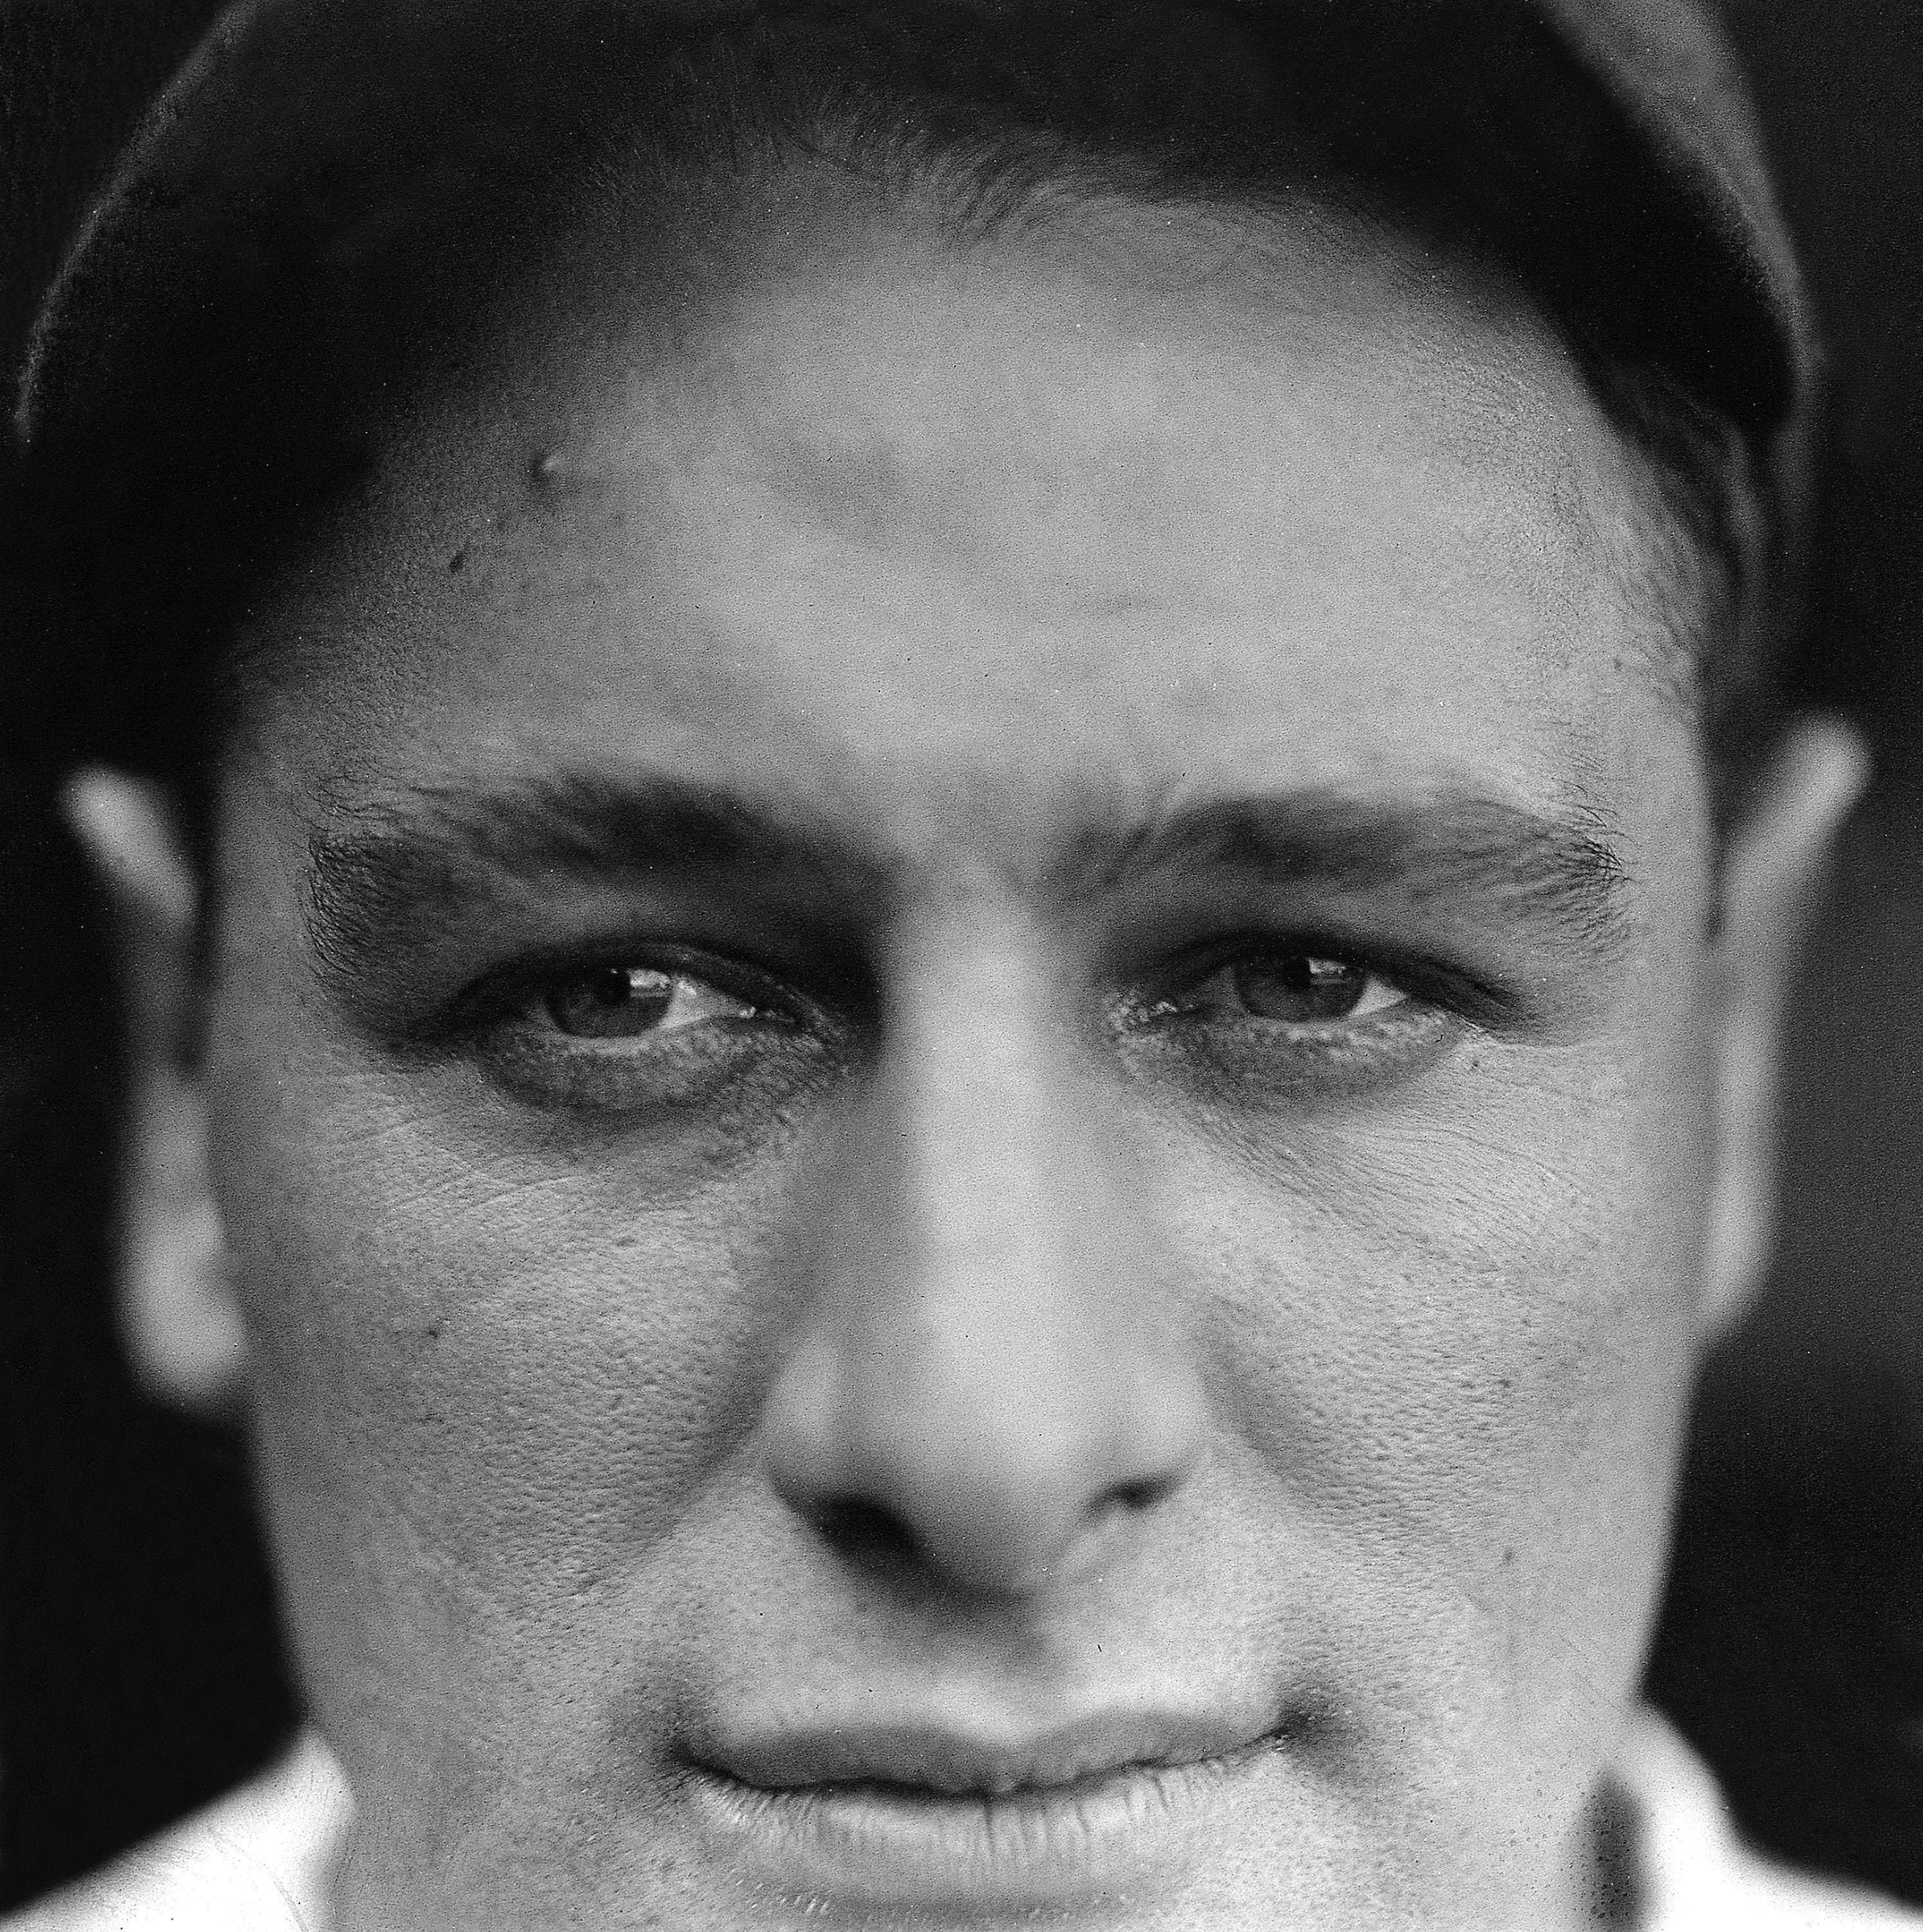 MLB - Remembering Lou Gehrig's farewell speech - ESPN